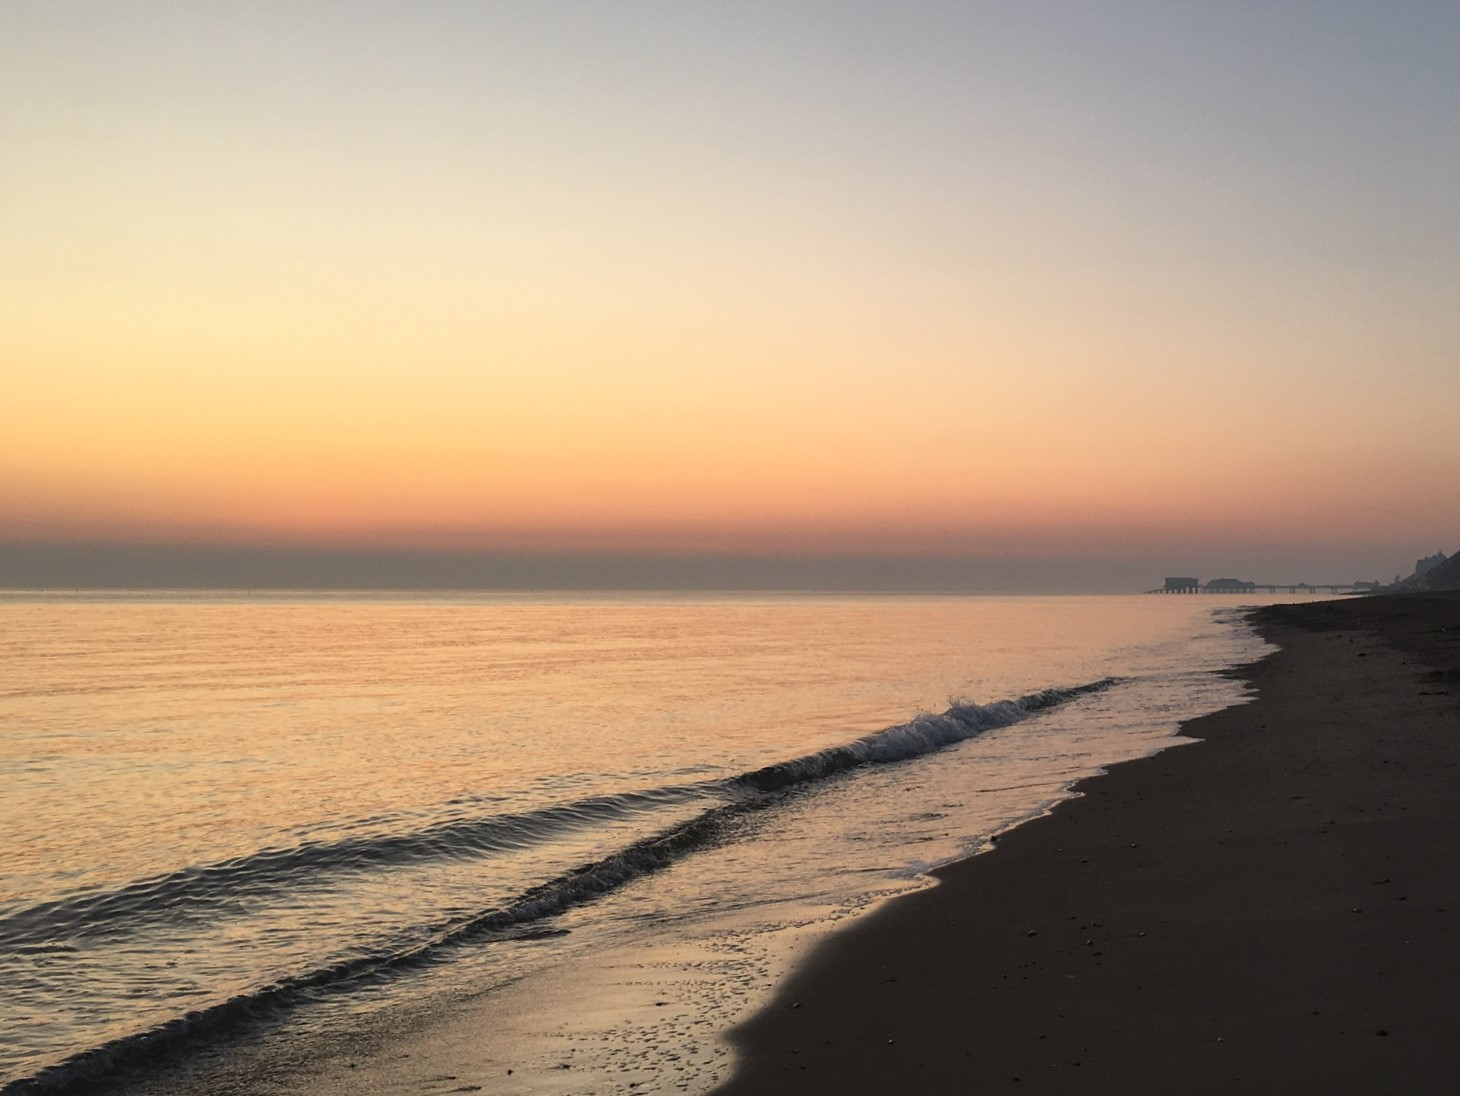 Sunrise East Runton beach towards Cromer @NorfolkCoastline